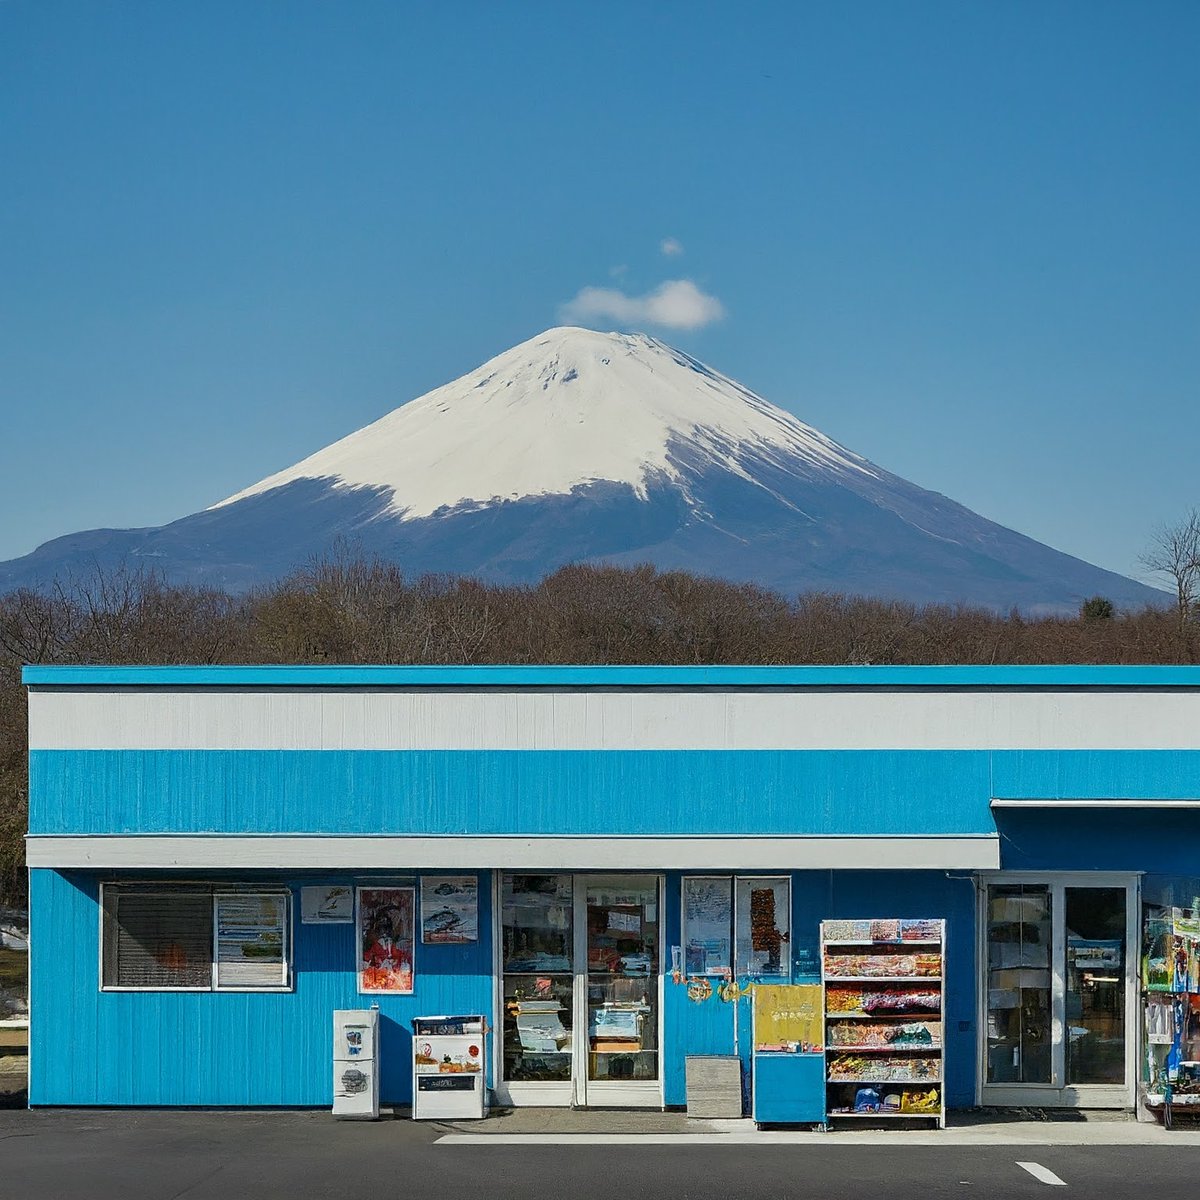 Geminiで作ったもの。
時事ネタ。自撮りにコンビニと富士山が写り込むとクールなんですかね？
よく分かりませんが。
#Google #Gemini #ai #aiart #cg #MountFUJI #conveniencestore